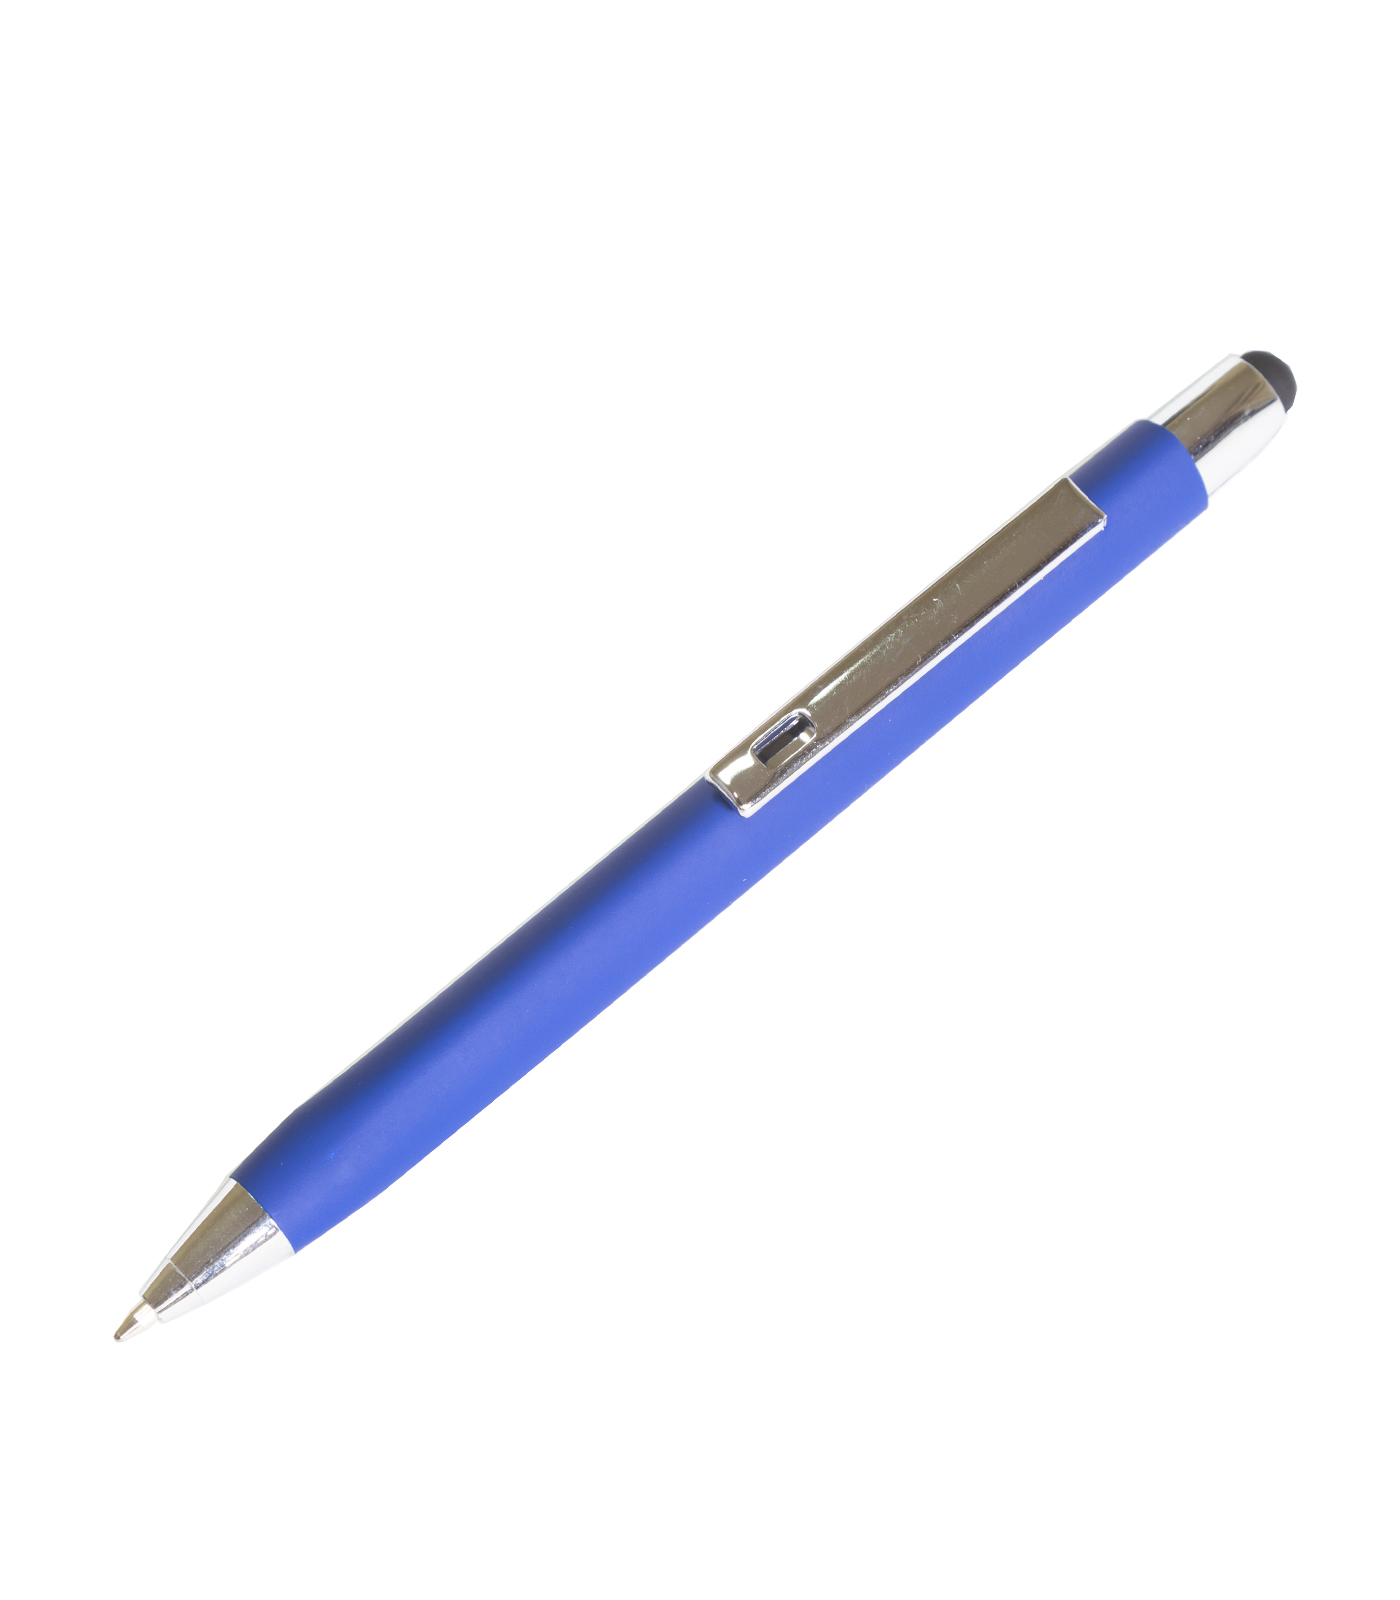 Atom Ballpoint Thin Pen - Blue Metal